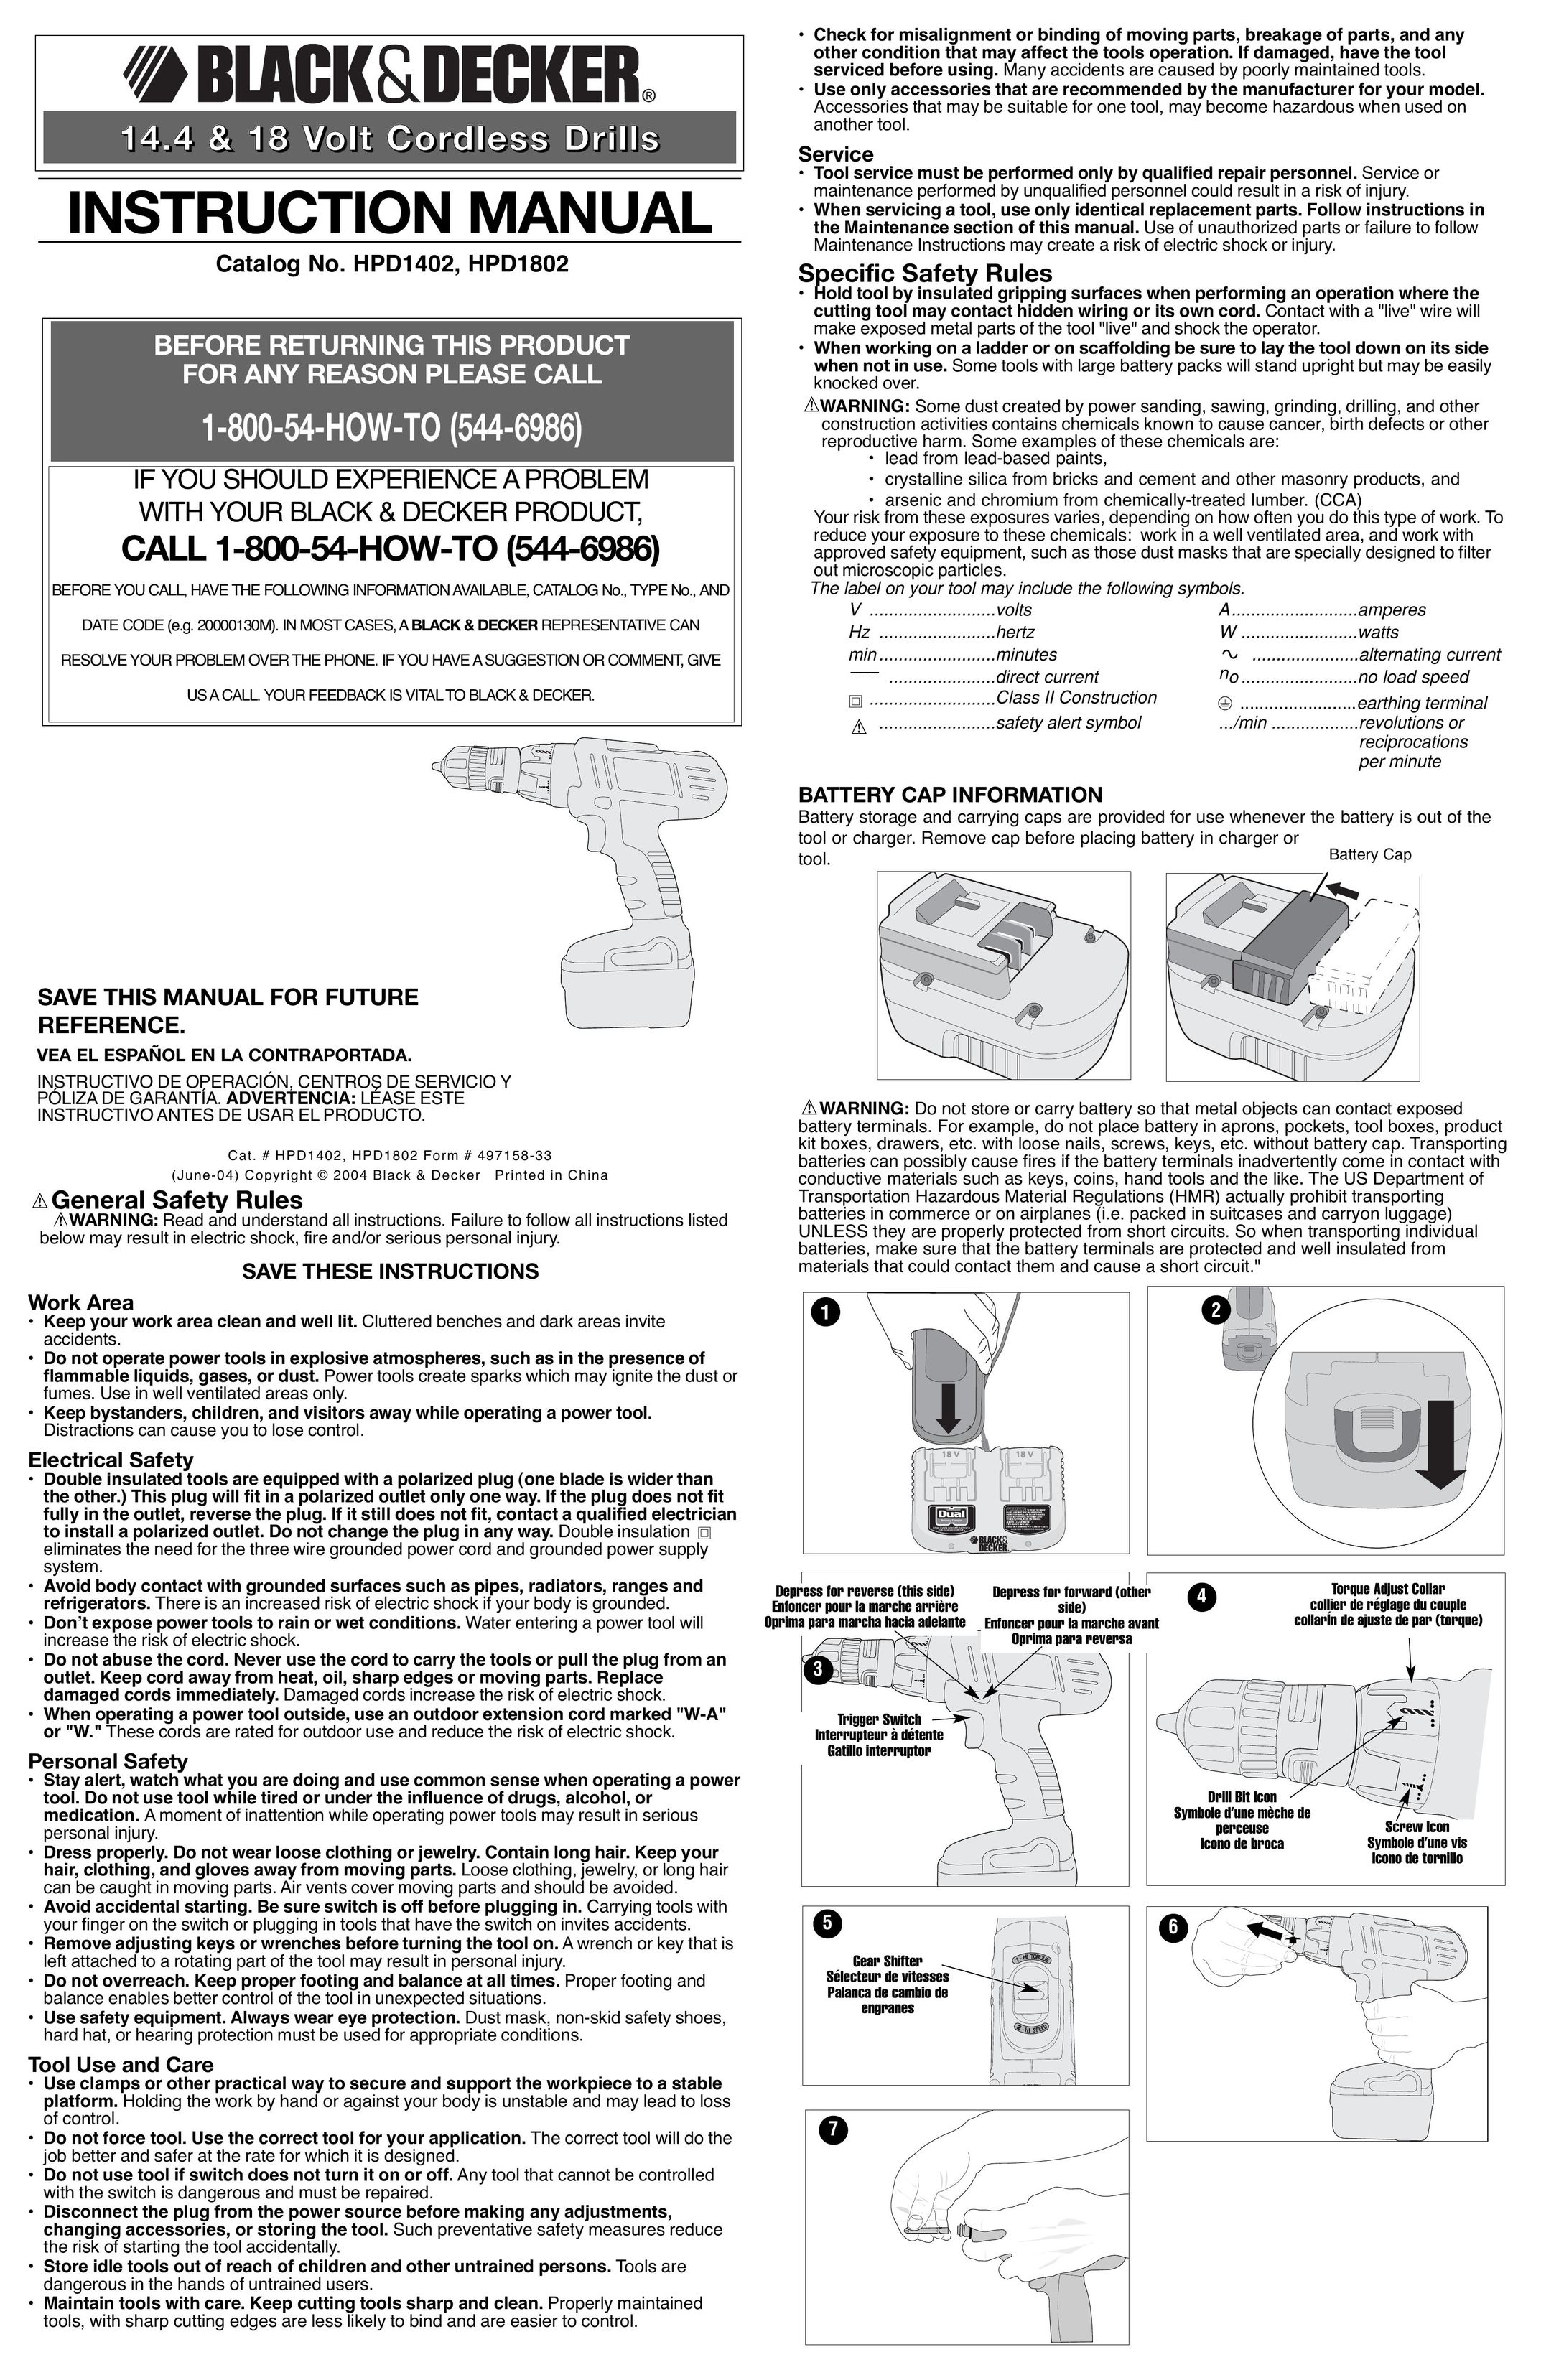 Black & Decker 497158-33 Cordless Drill User Manual